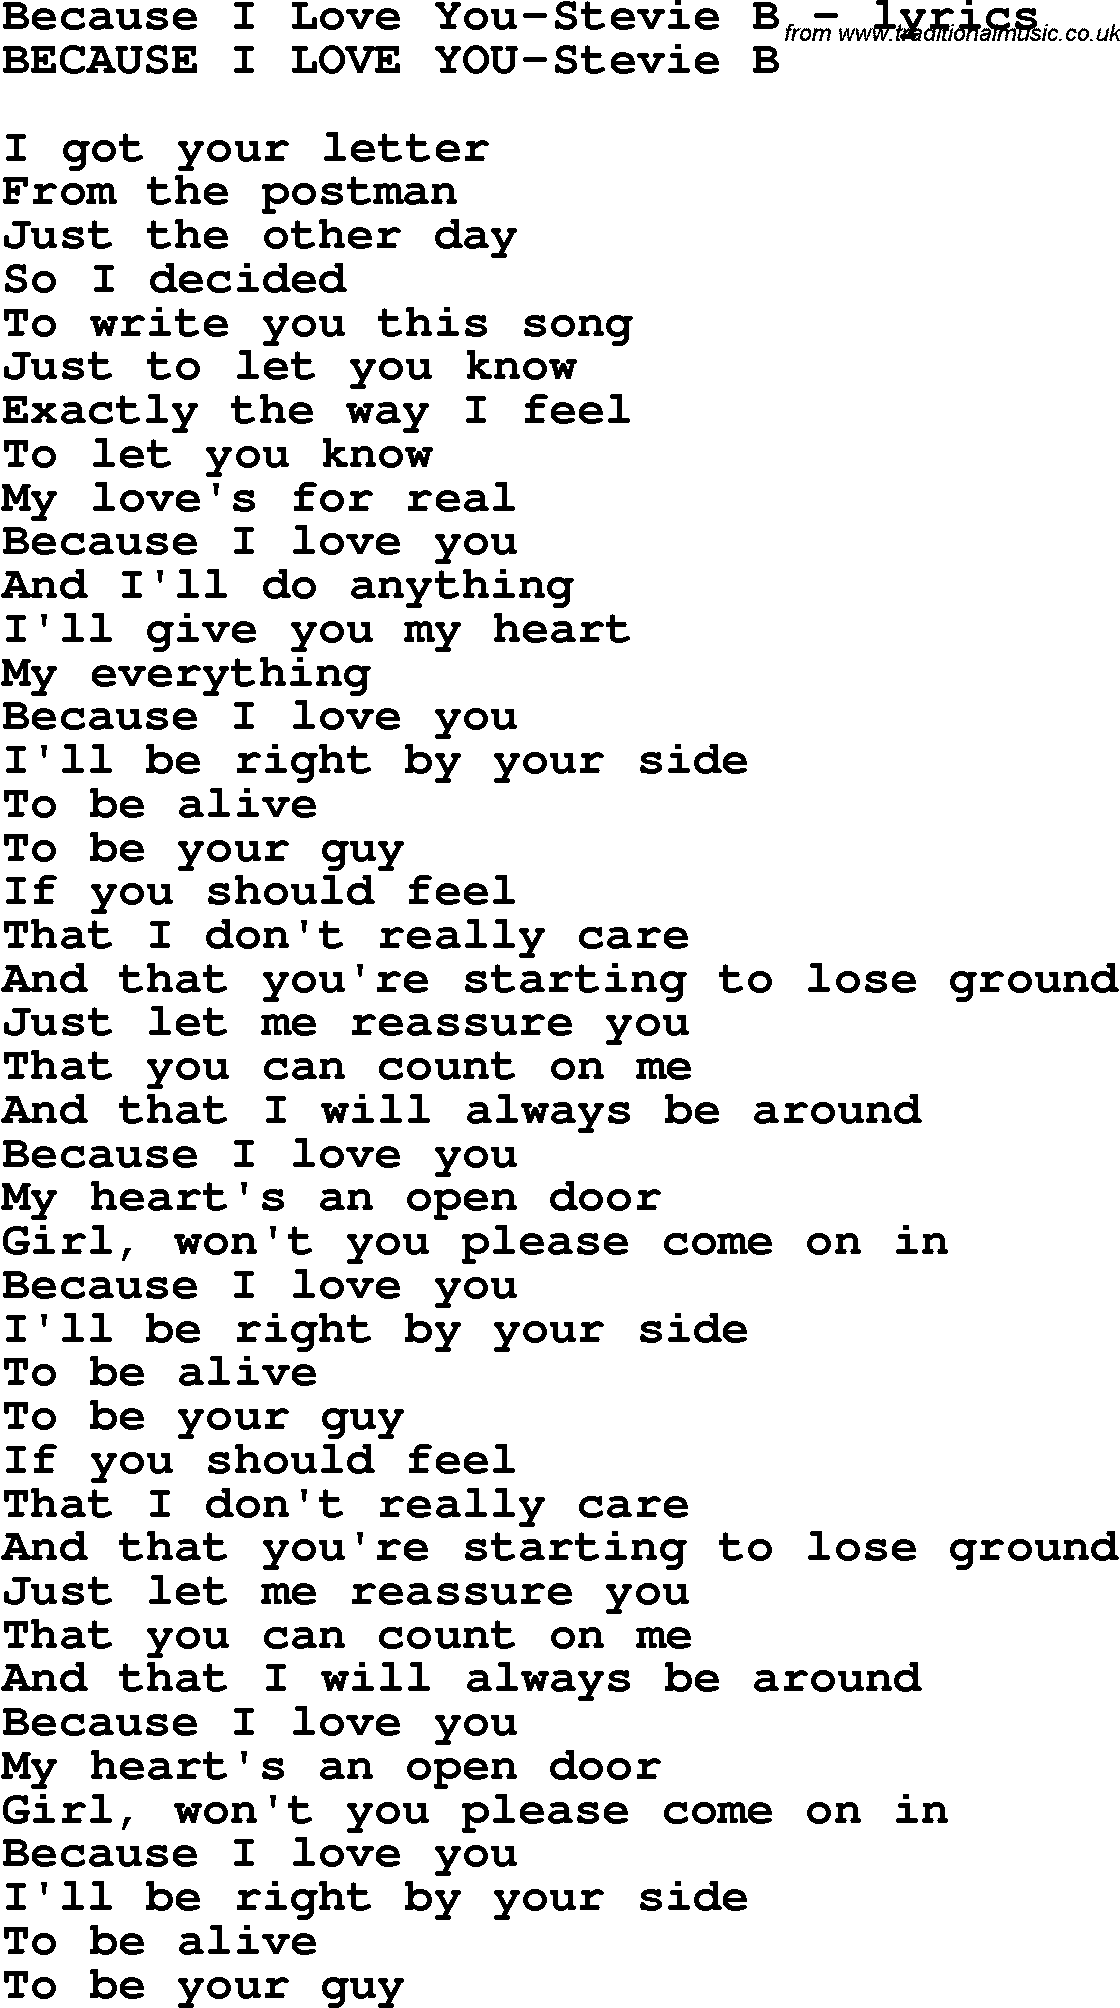 Love Song Lyrics For Because I Love You Stevie B